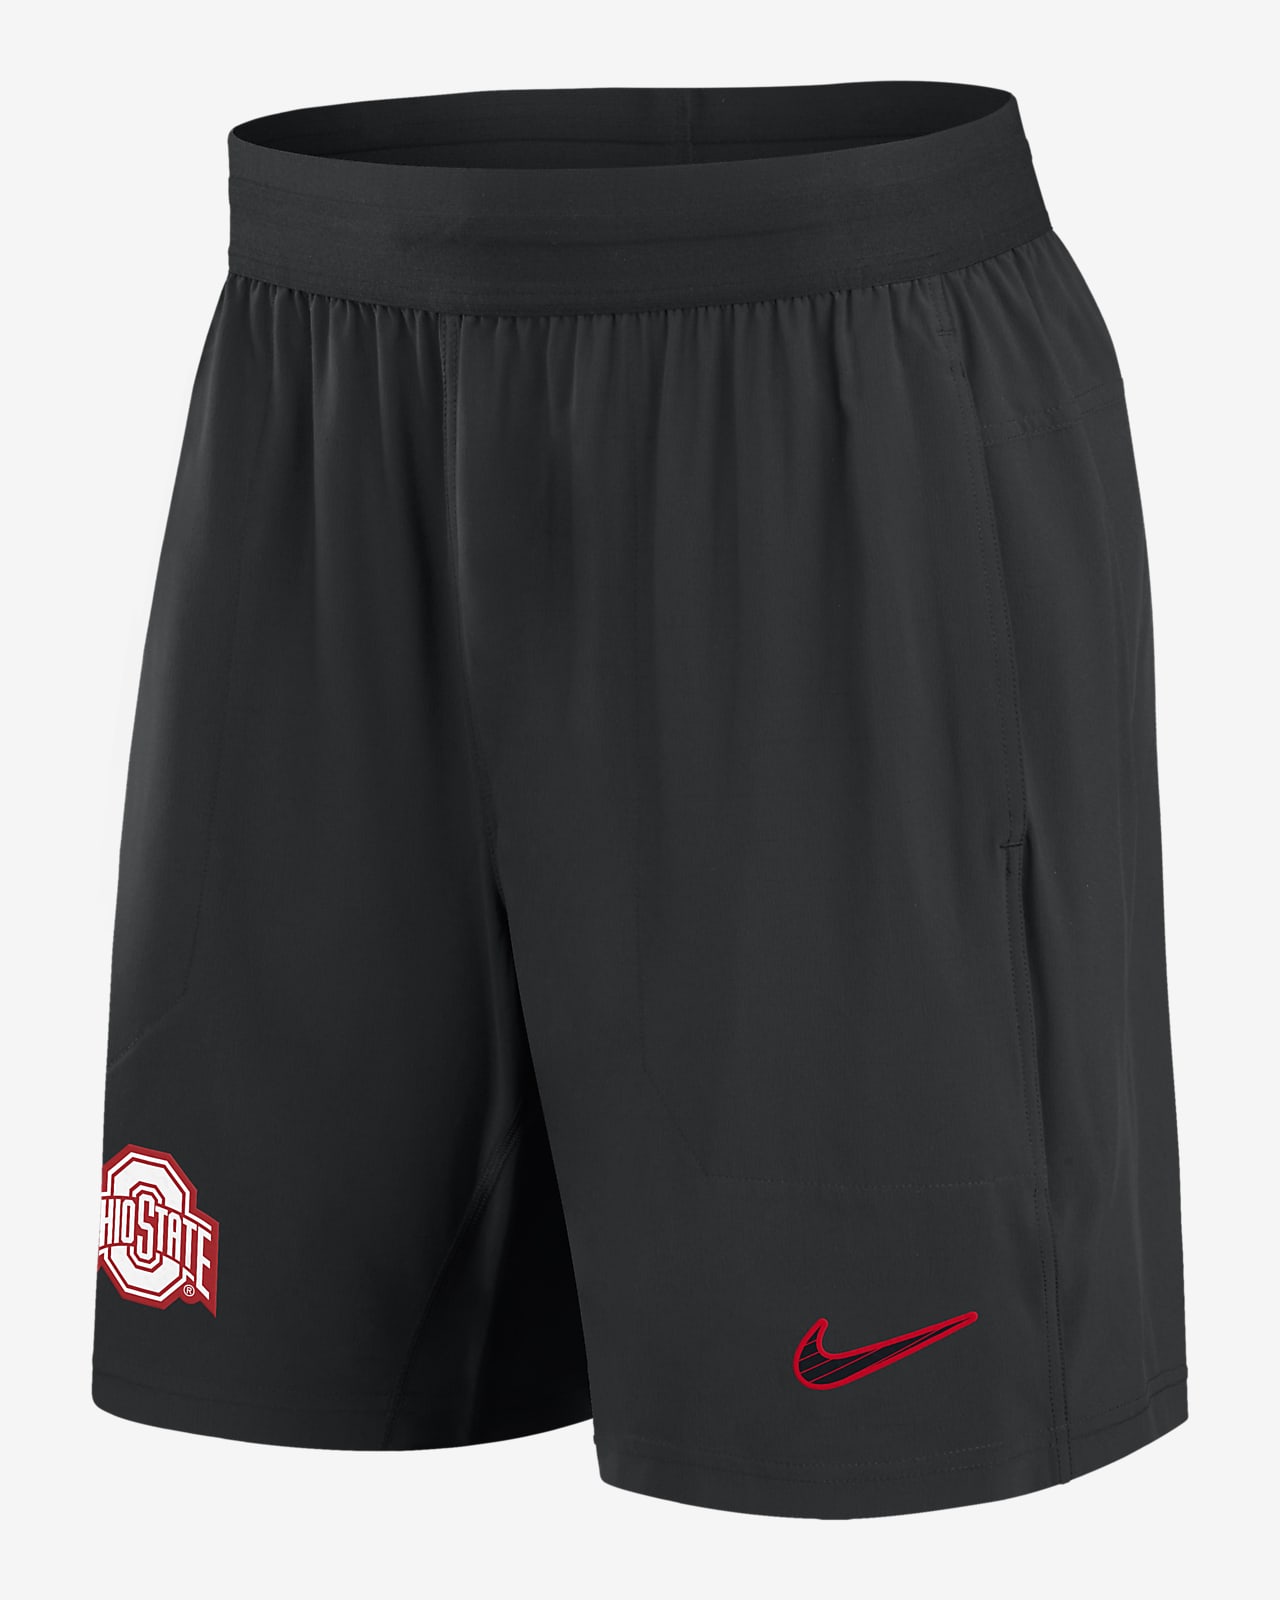 Shorts universitarios Nike Dri-FIT para hombre Ohio State Buckeyes Sideline